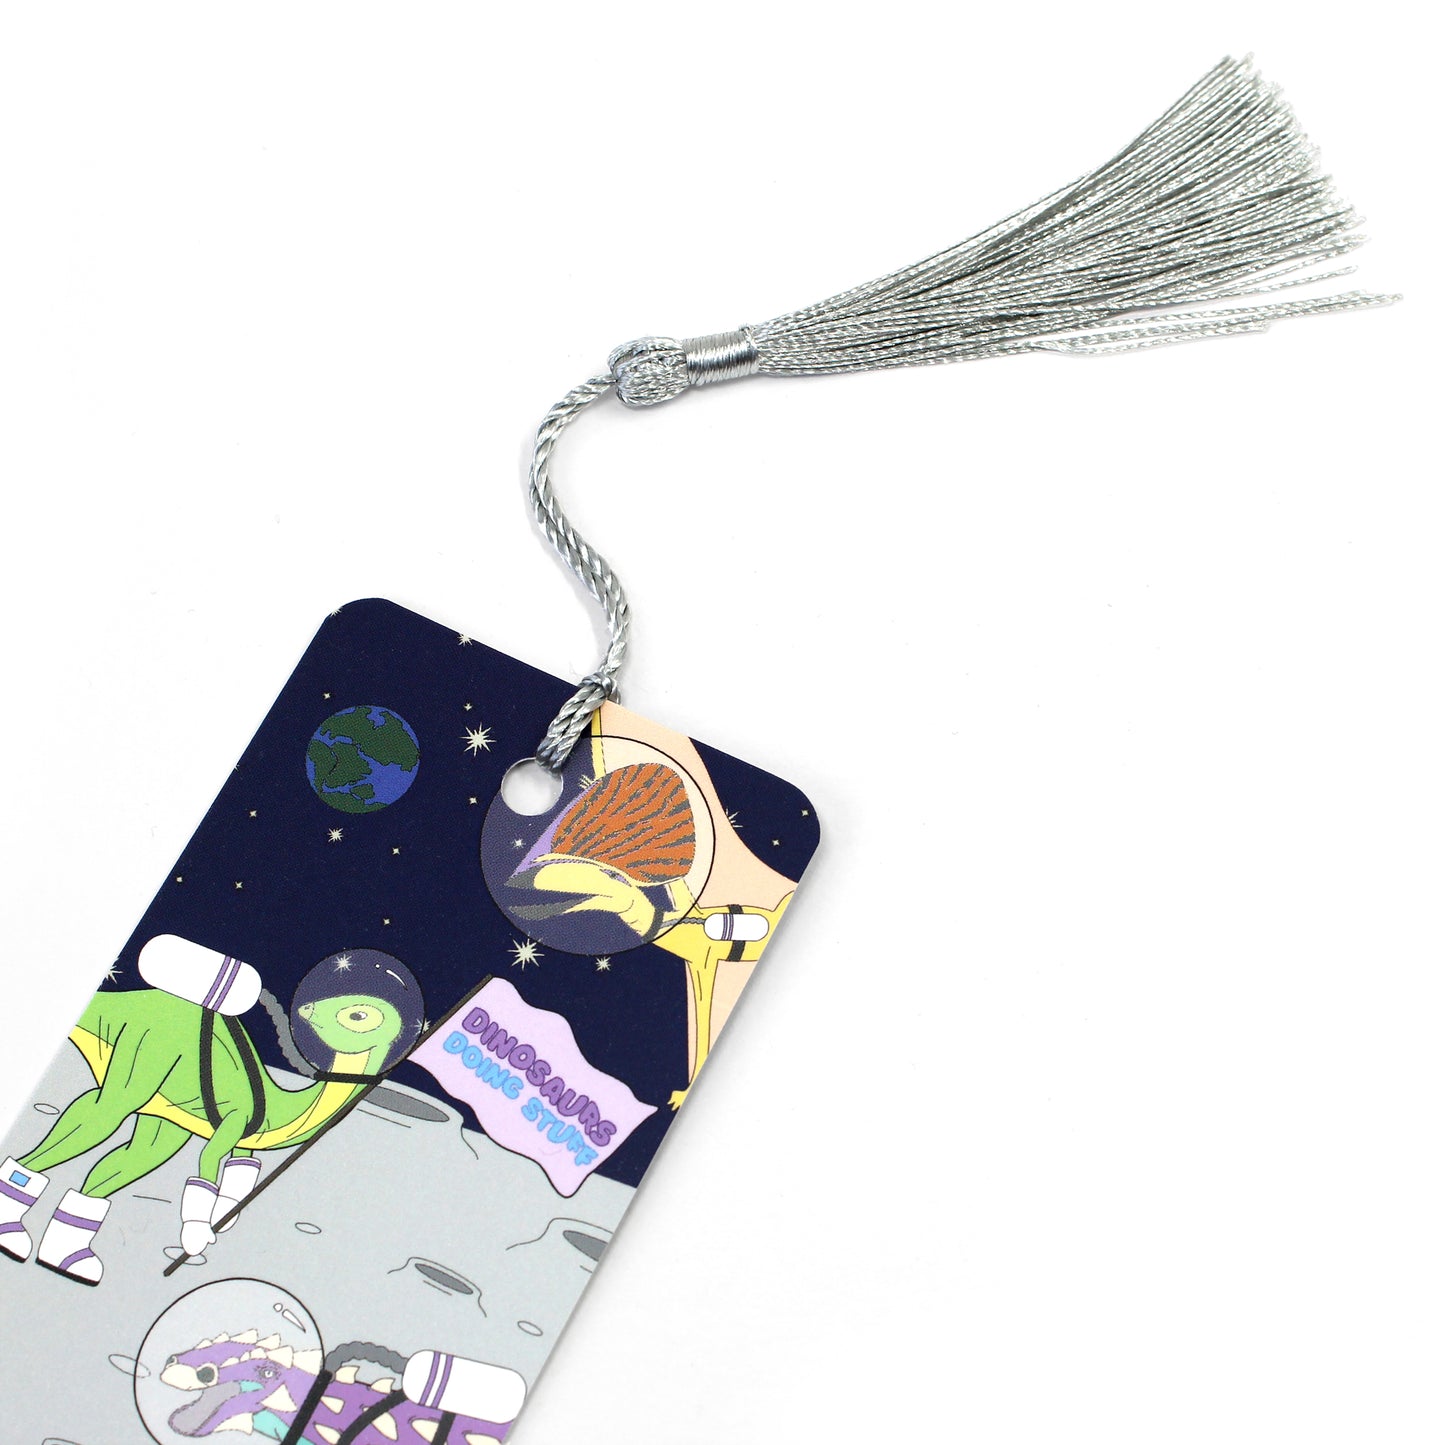 space dinosaur bookmark with a grey tassel